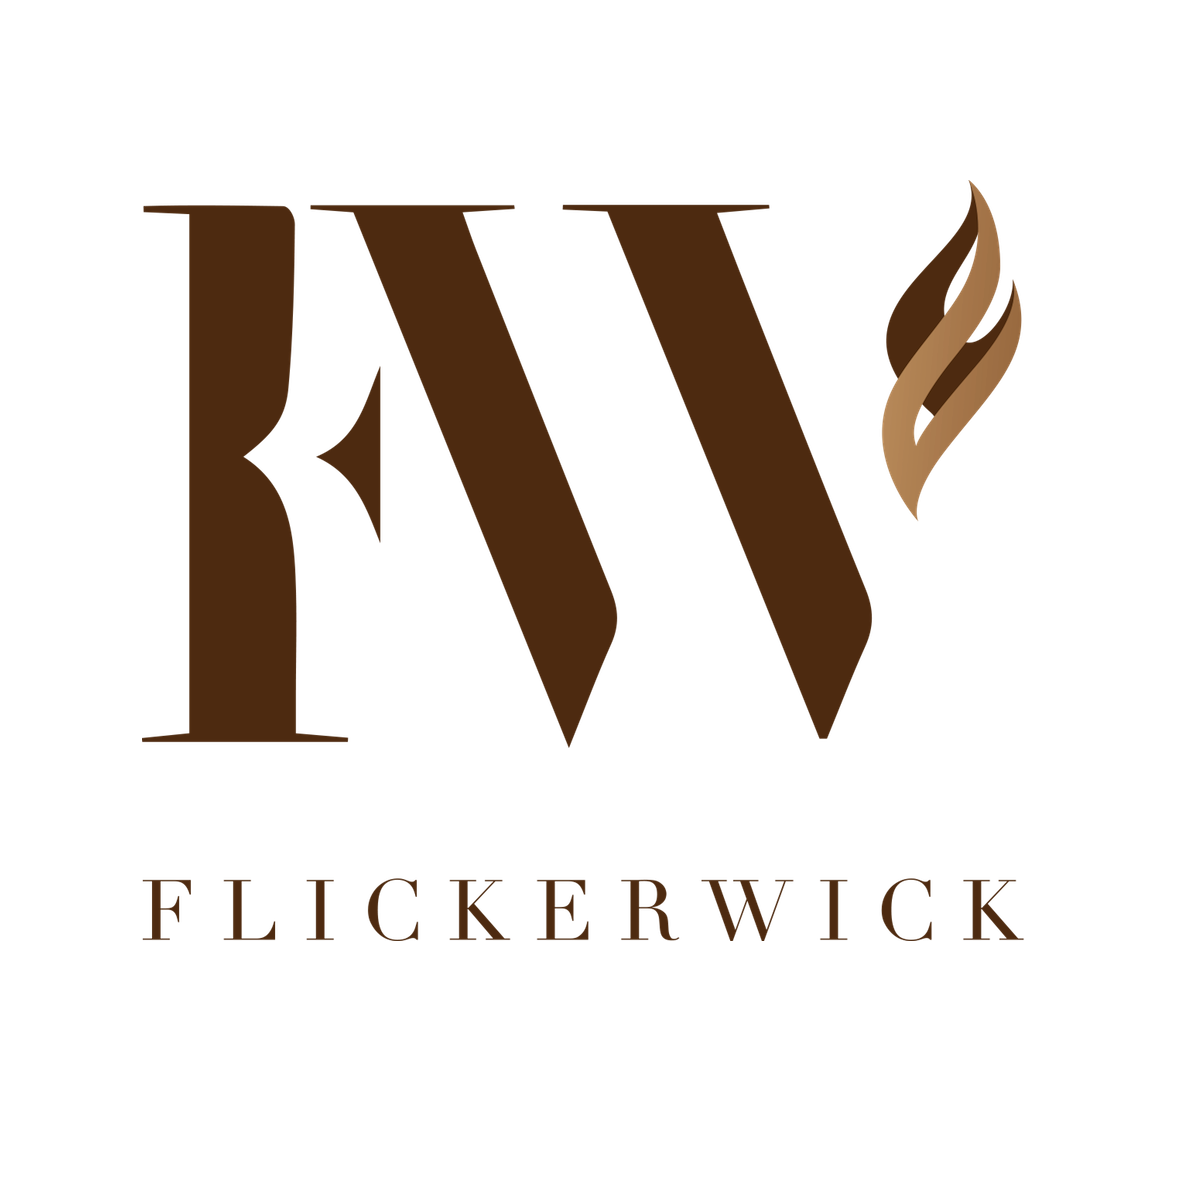 Flickerwick Ltd brand logo